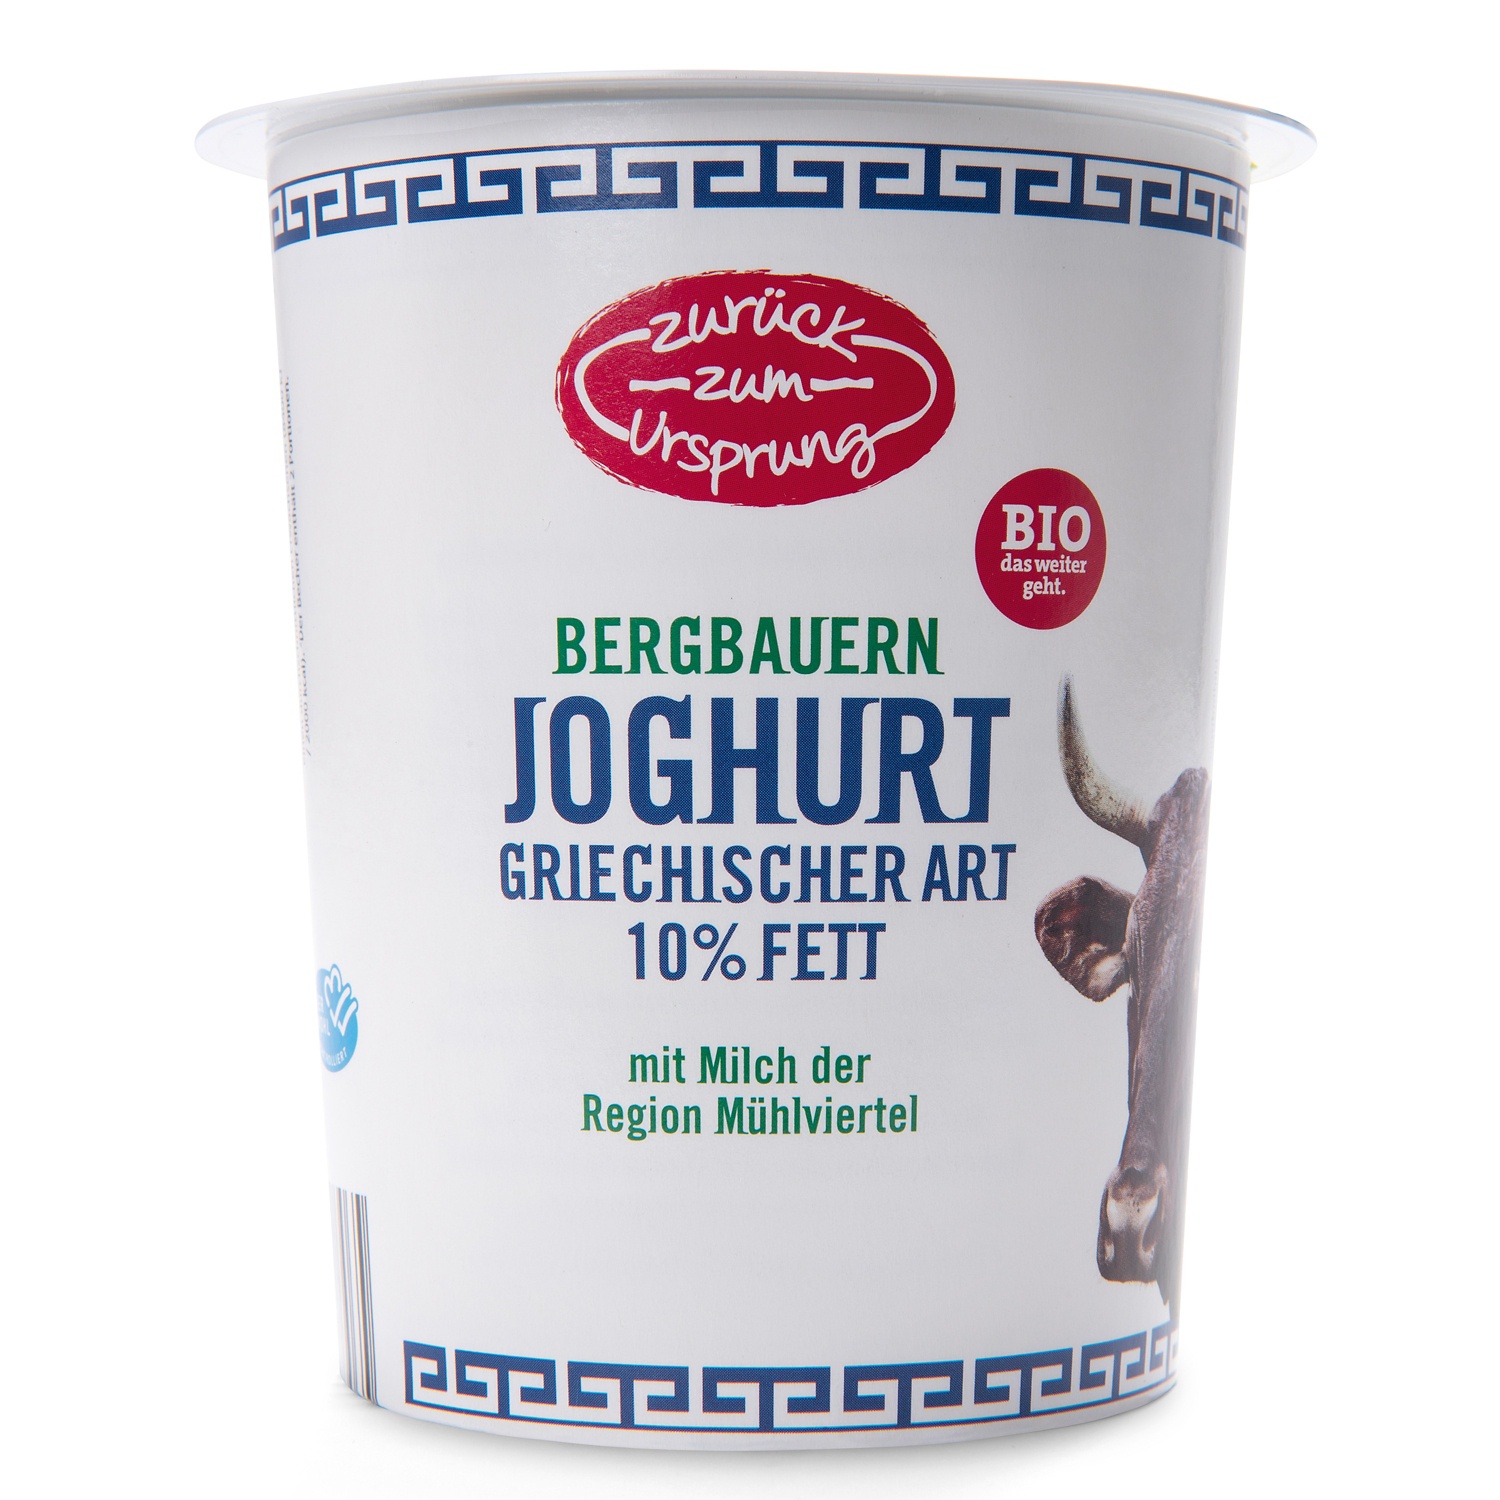 ZURÜCK ZUM URSPRUNG BIO-Bergbauern Joghurt griechische Art, 10% Fett